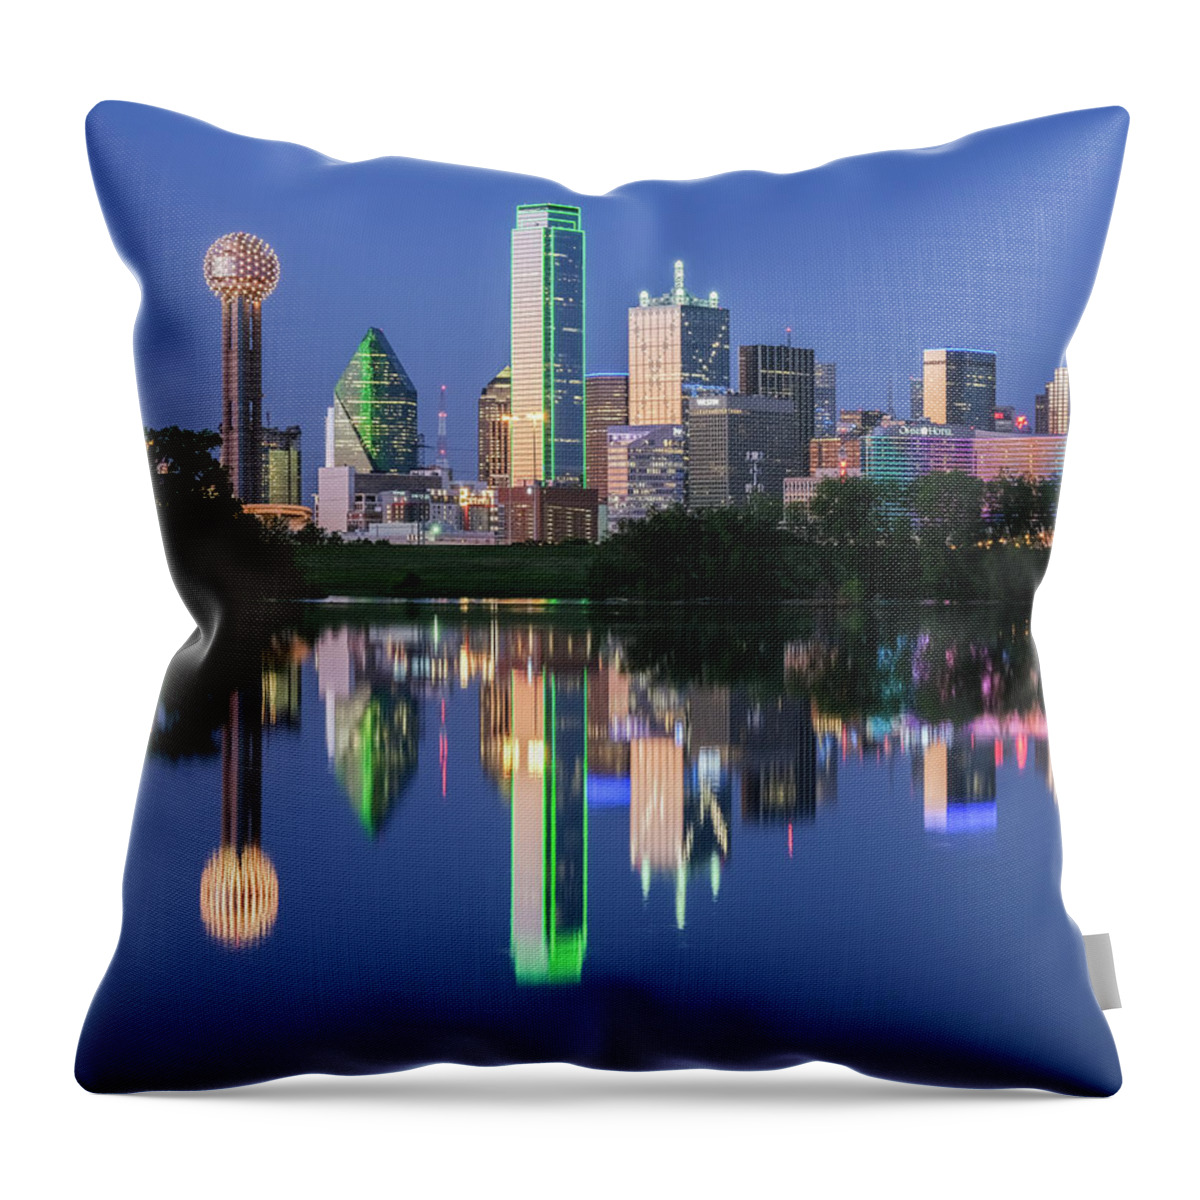 Dallas Throw Pillow featuring the photograph City of Dallas, Texas Reflection by Robert Bellomy